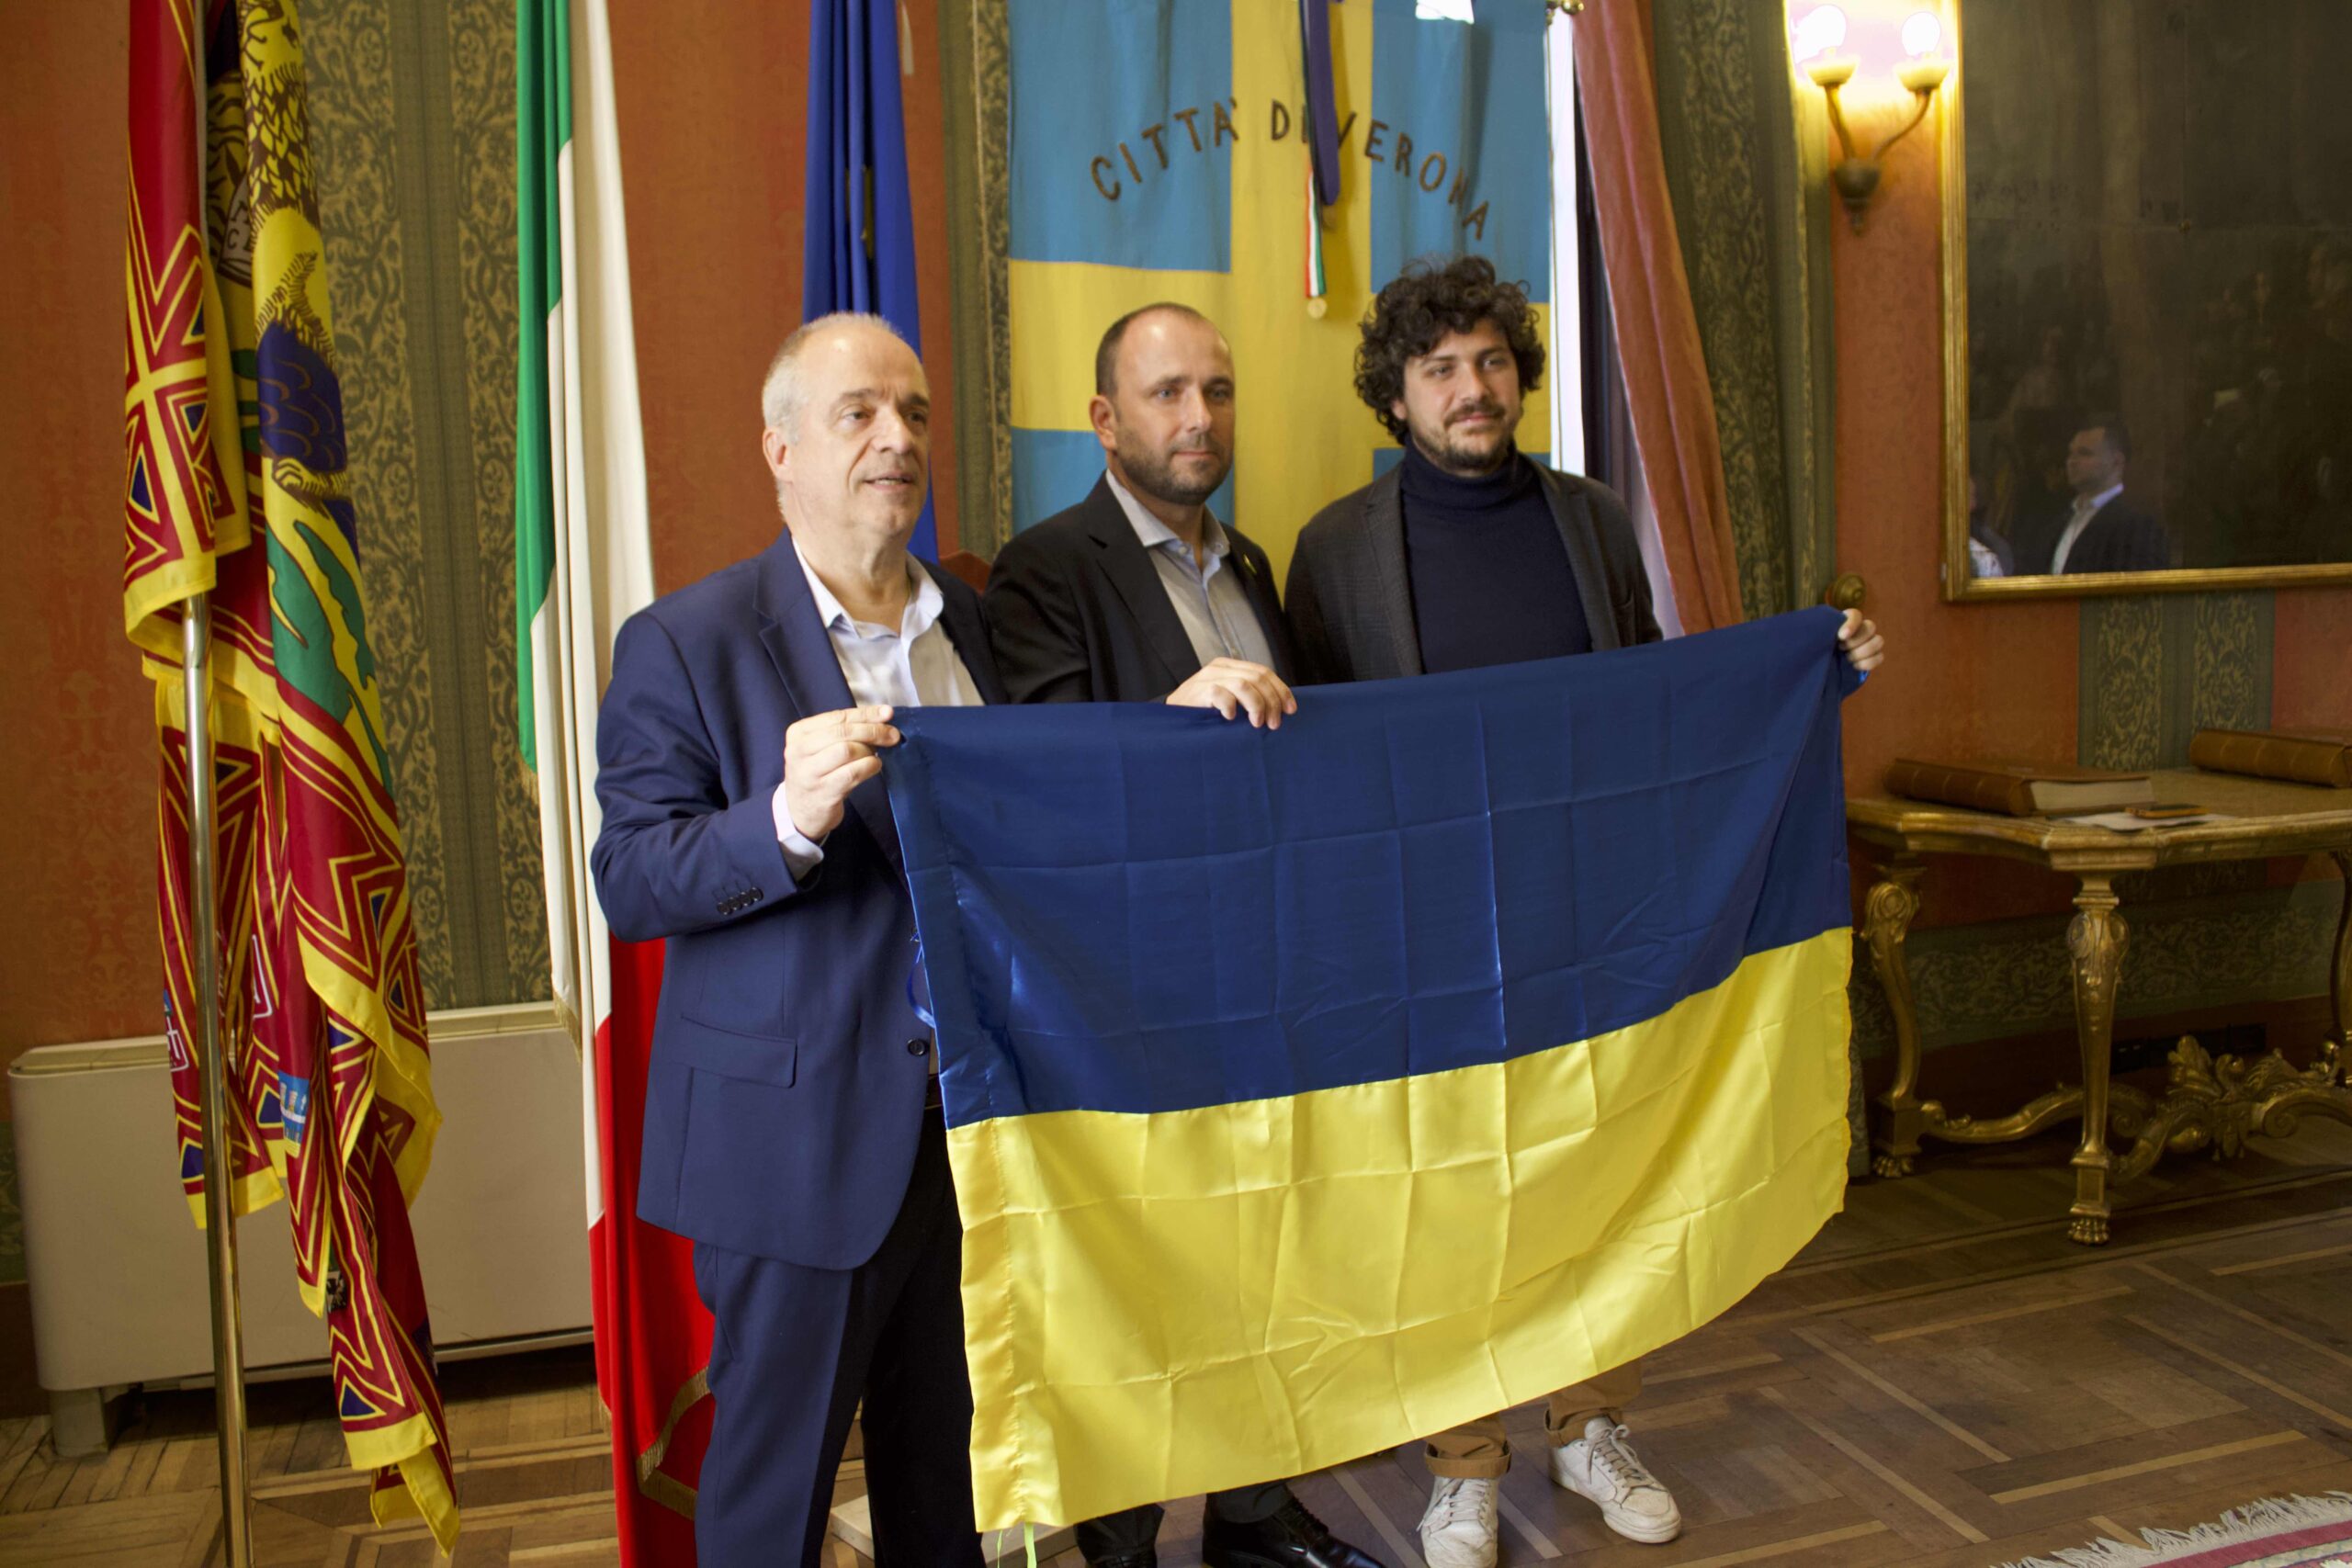 70 comuni ucraini aiutati dai Veronesi grazie a Malve per l’Ucraina